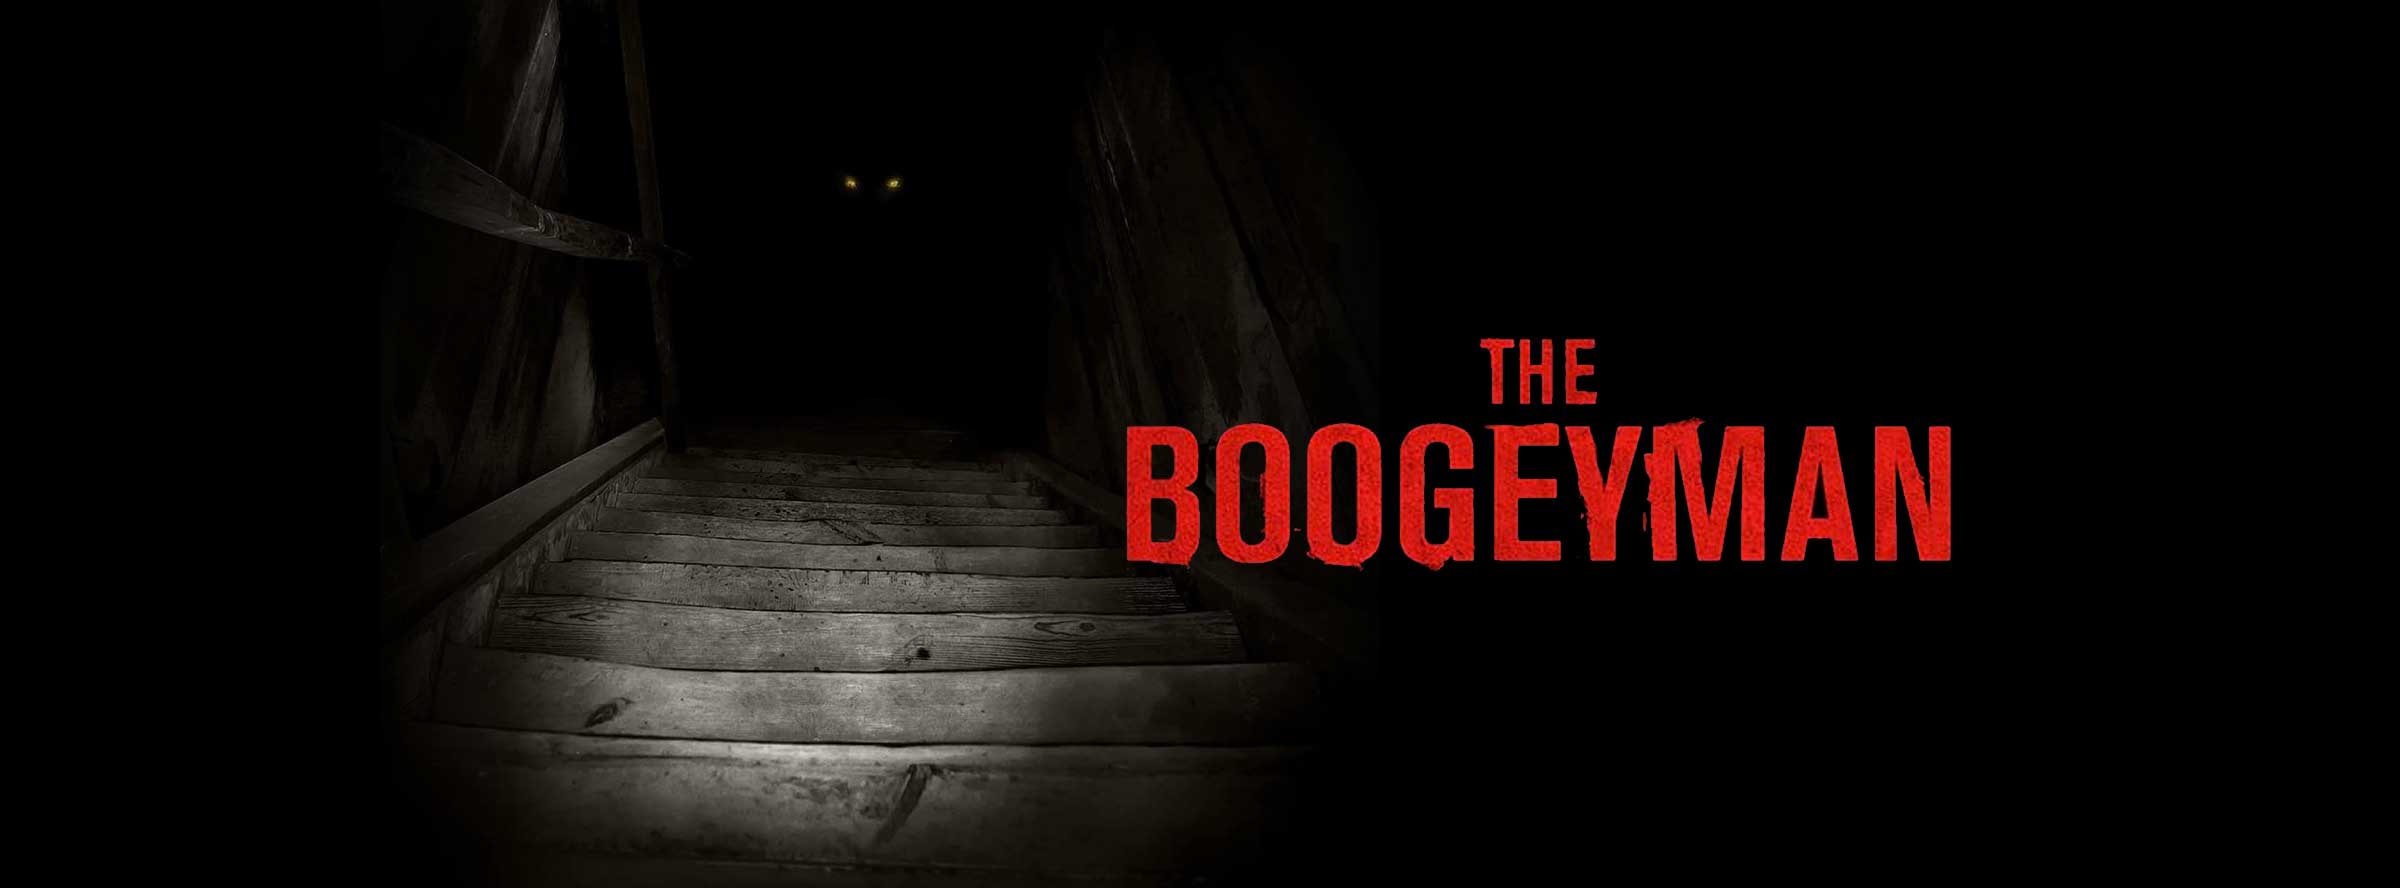 Slider Image for The Boogeyman